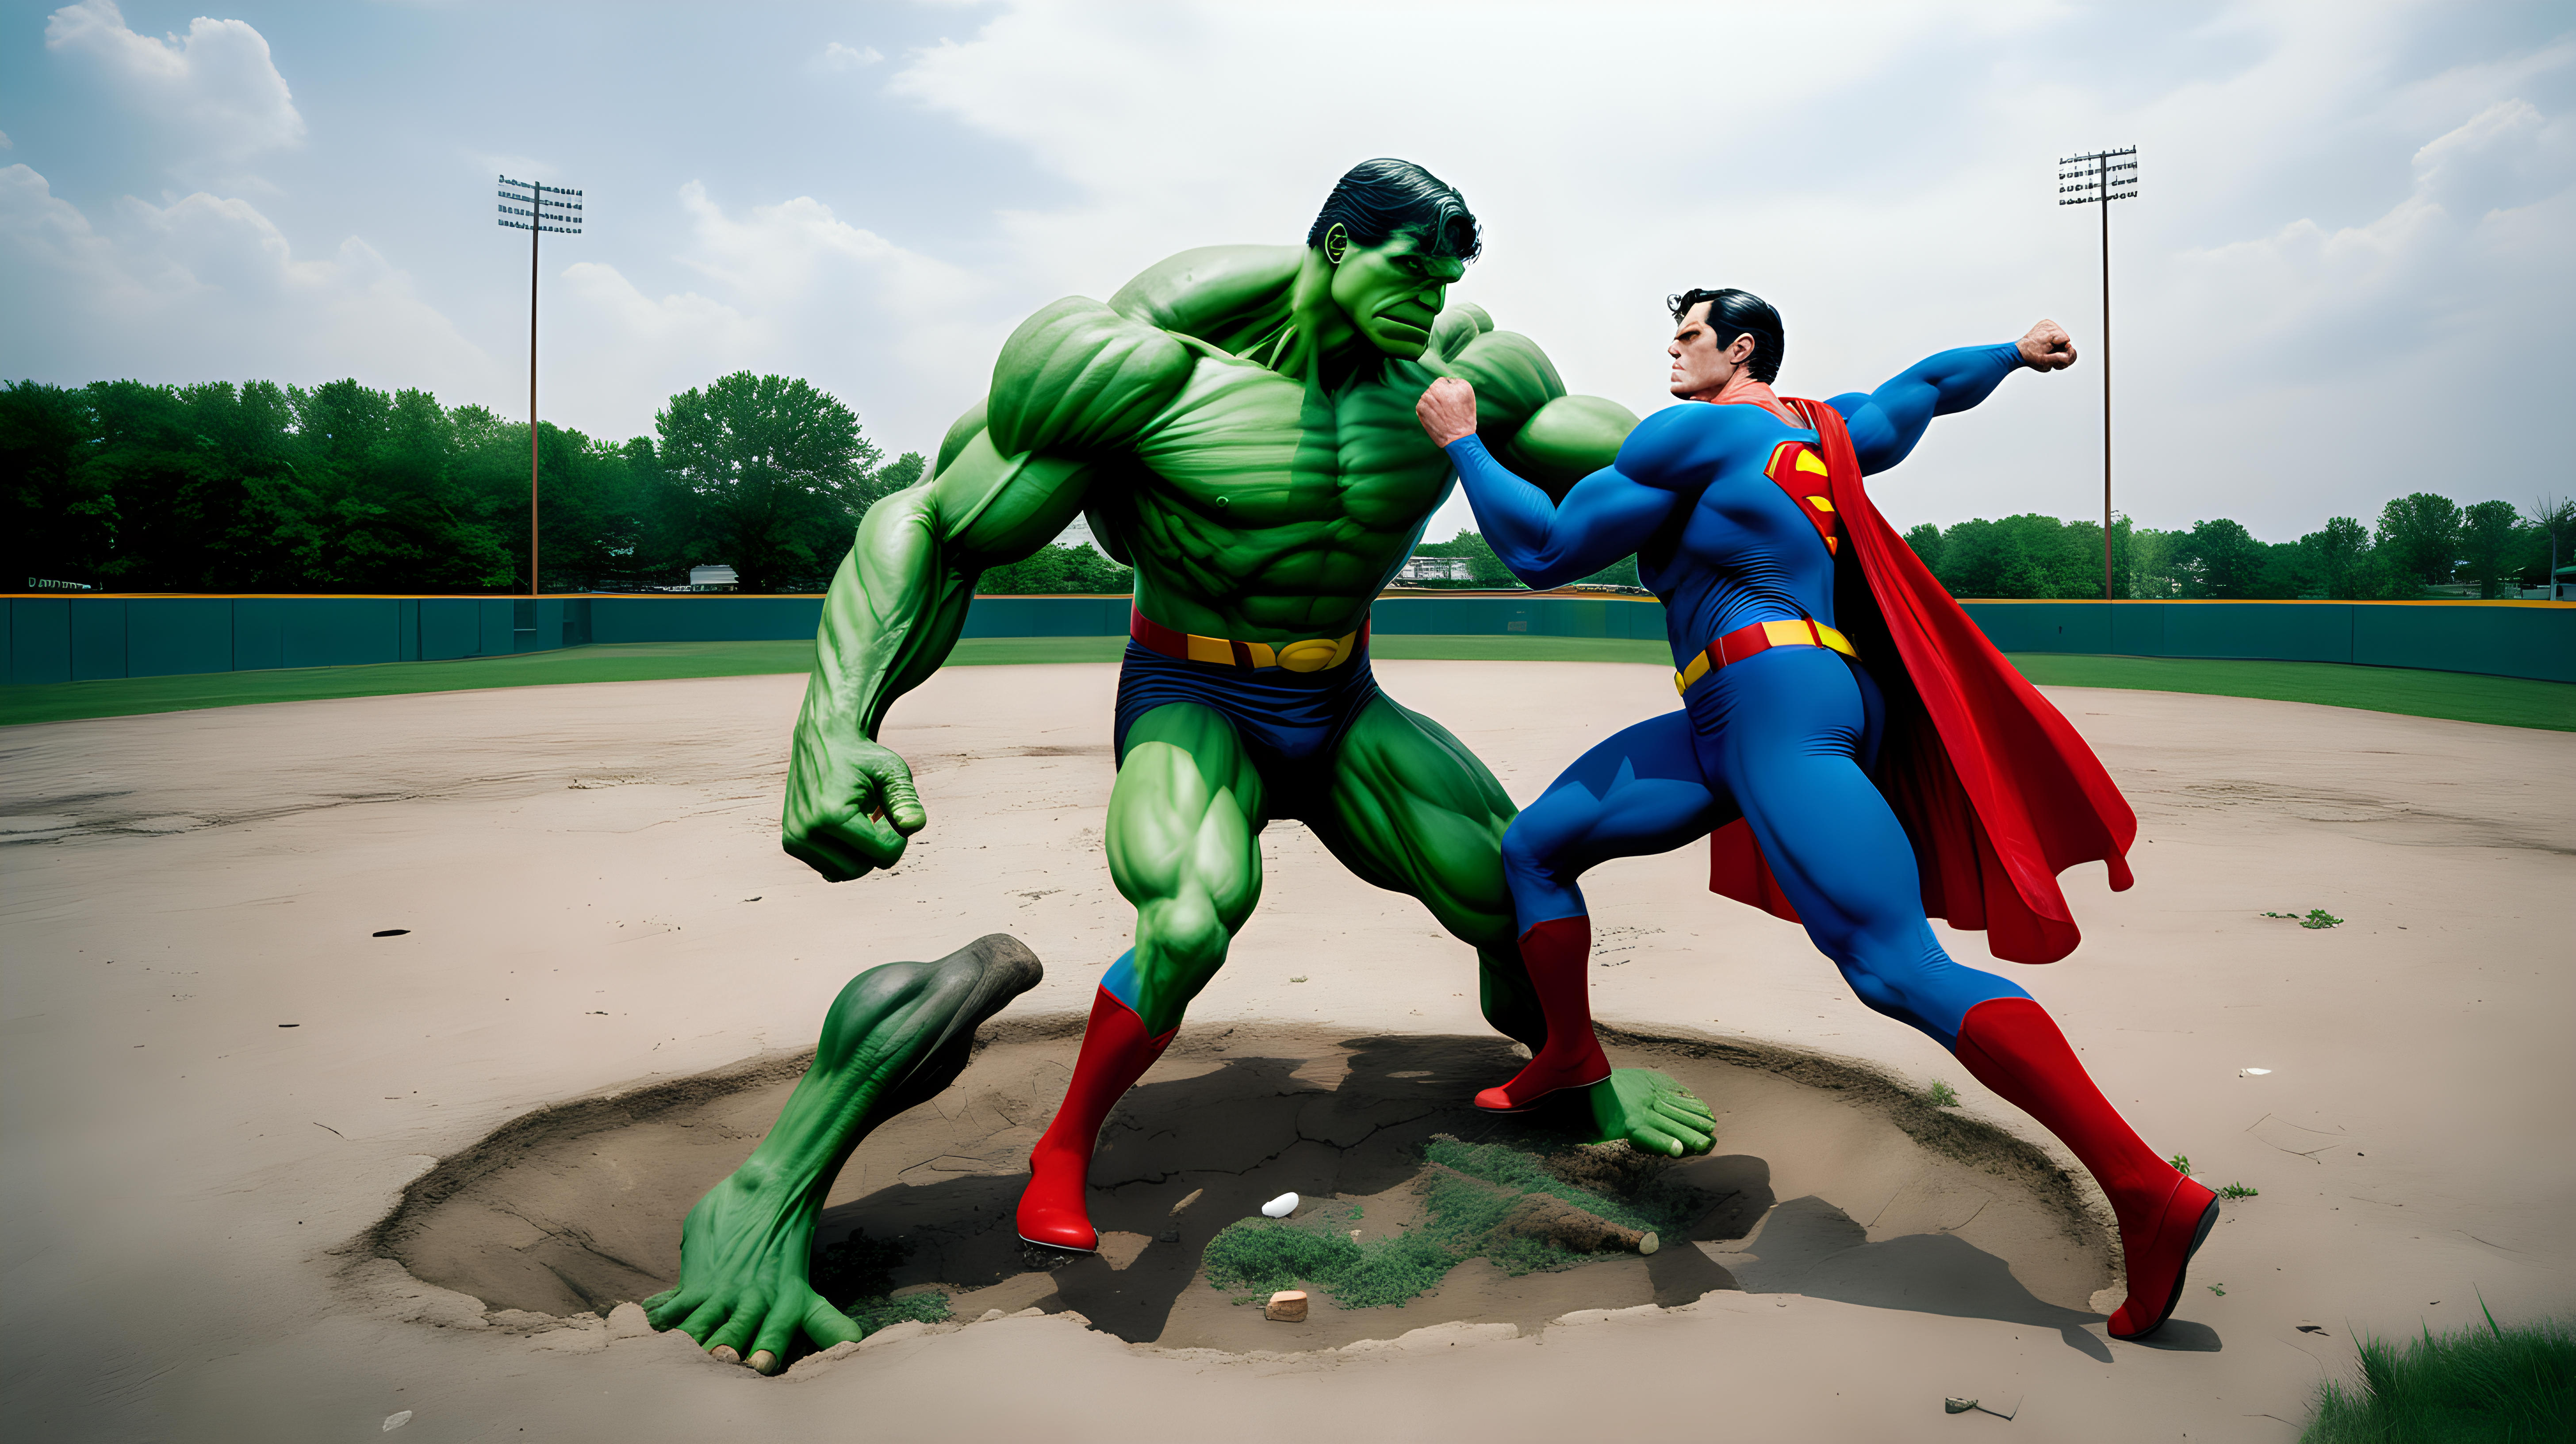 Superman fights the hulk in an abandon baseball park